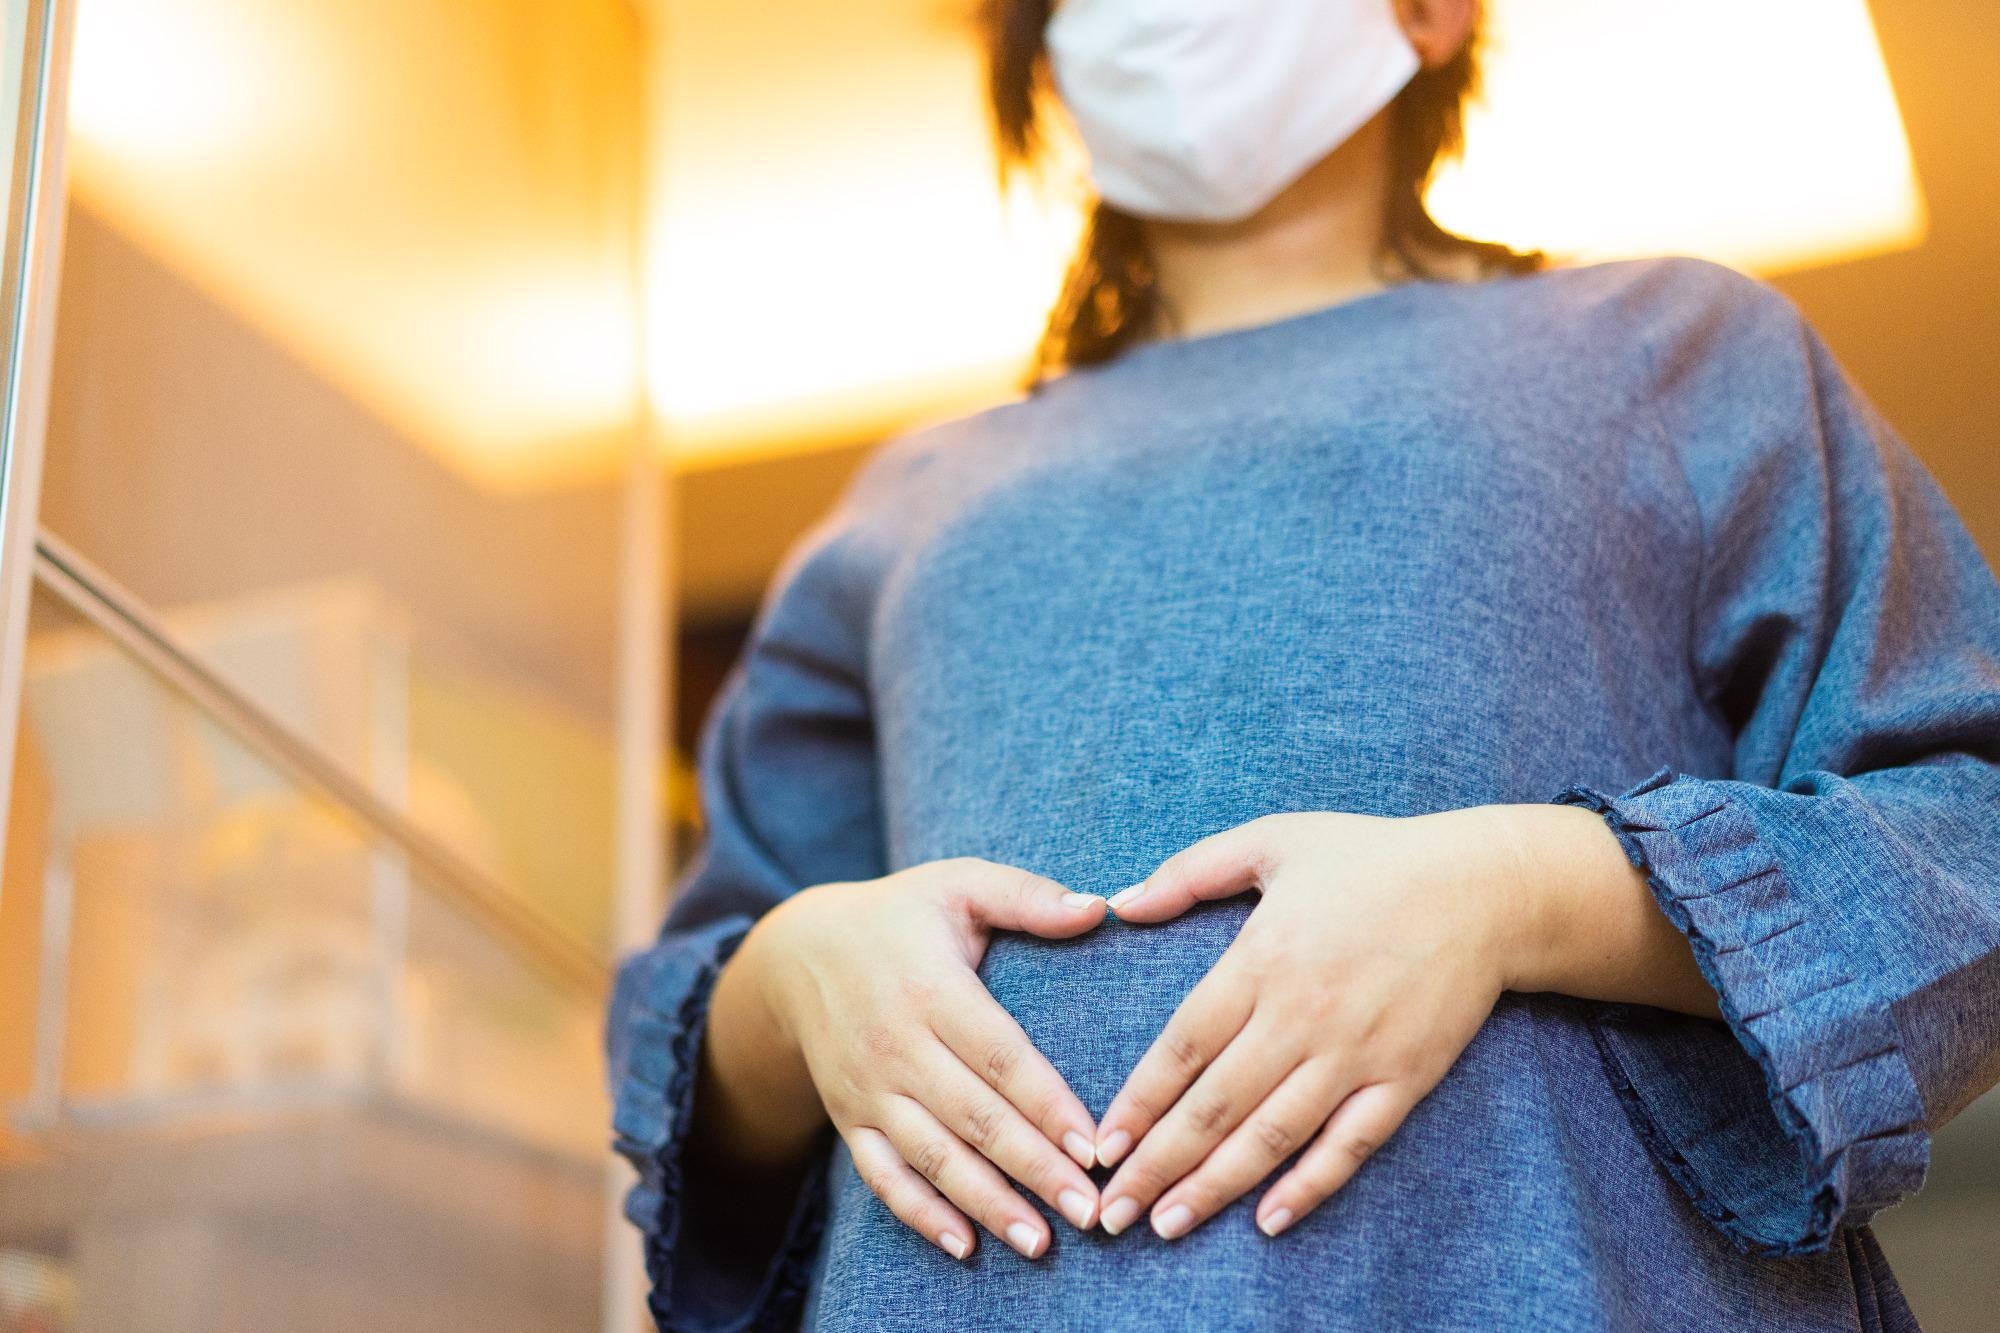 Study: Characteristics and treatment of hospitalized pregnant women with Coronavirus Disease 2019, COVID-19. Image Credit: MIA Studio / Shutterstock